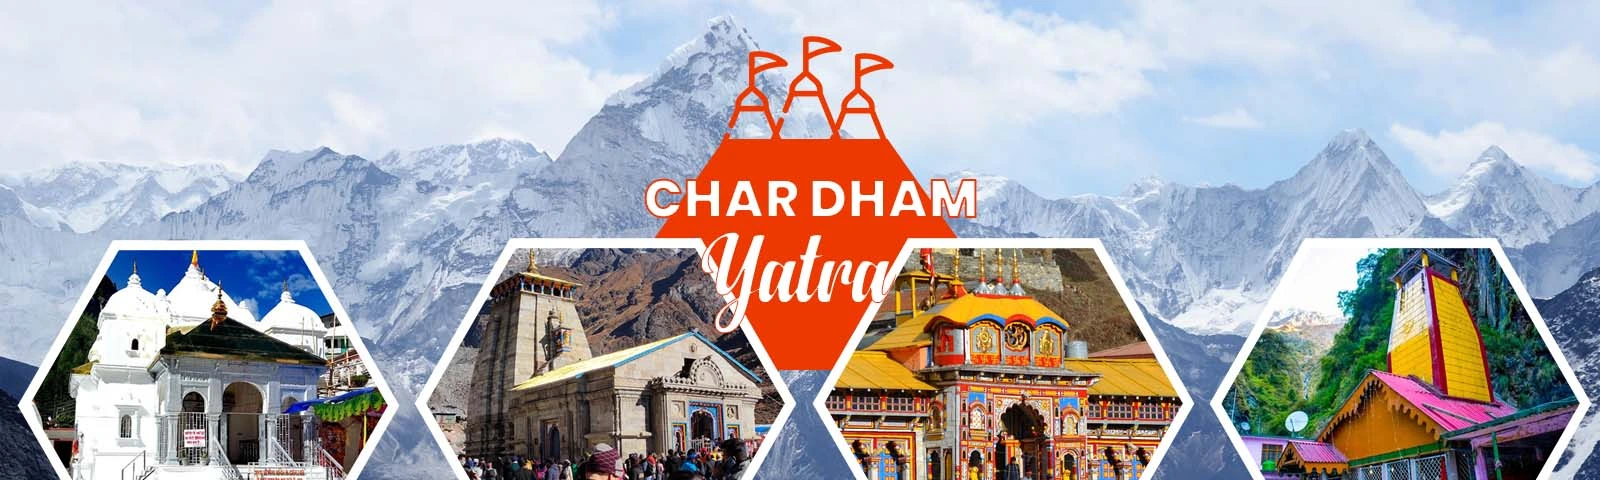 Chardham Yatra Travel Guide